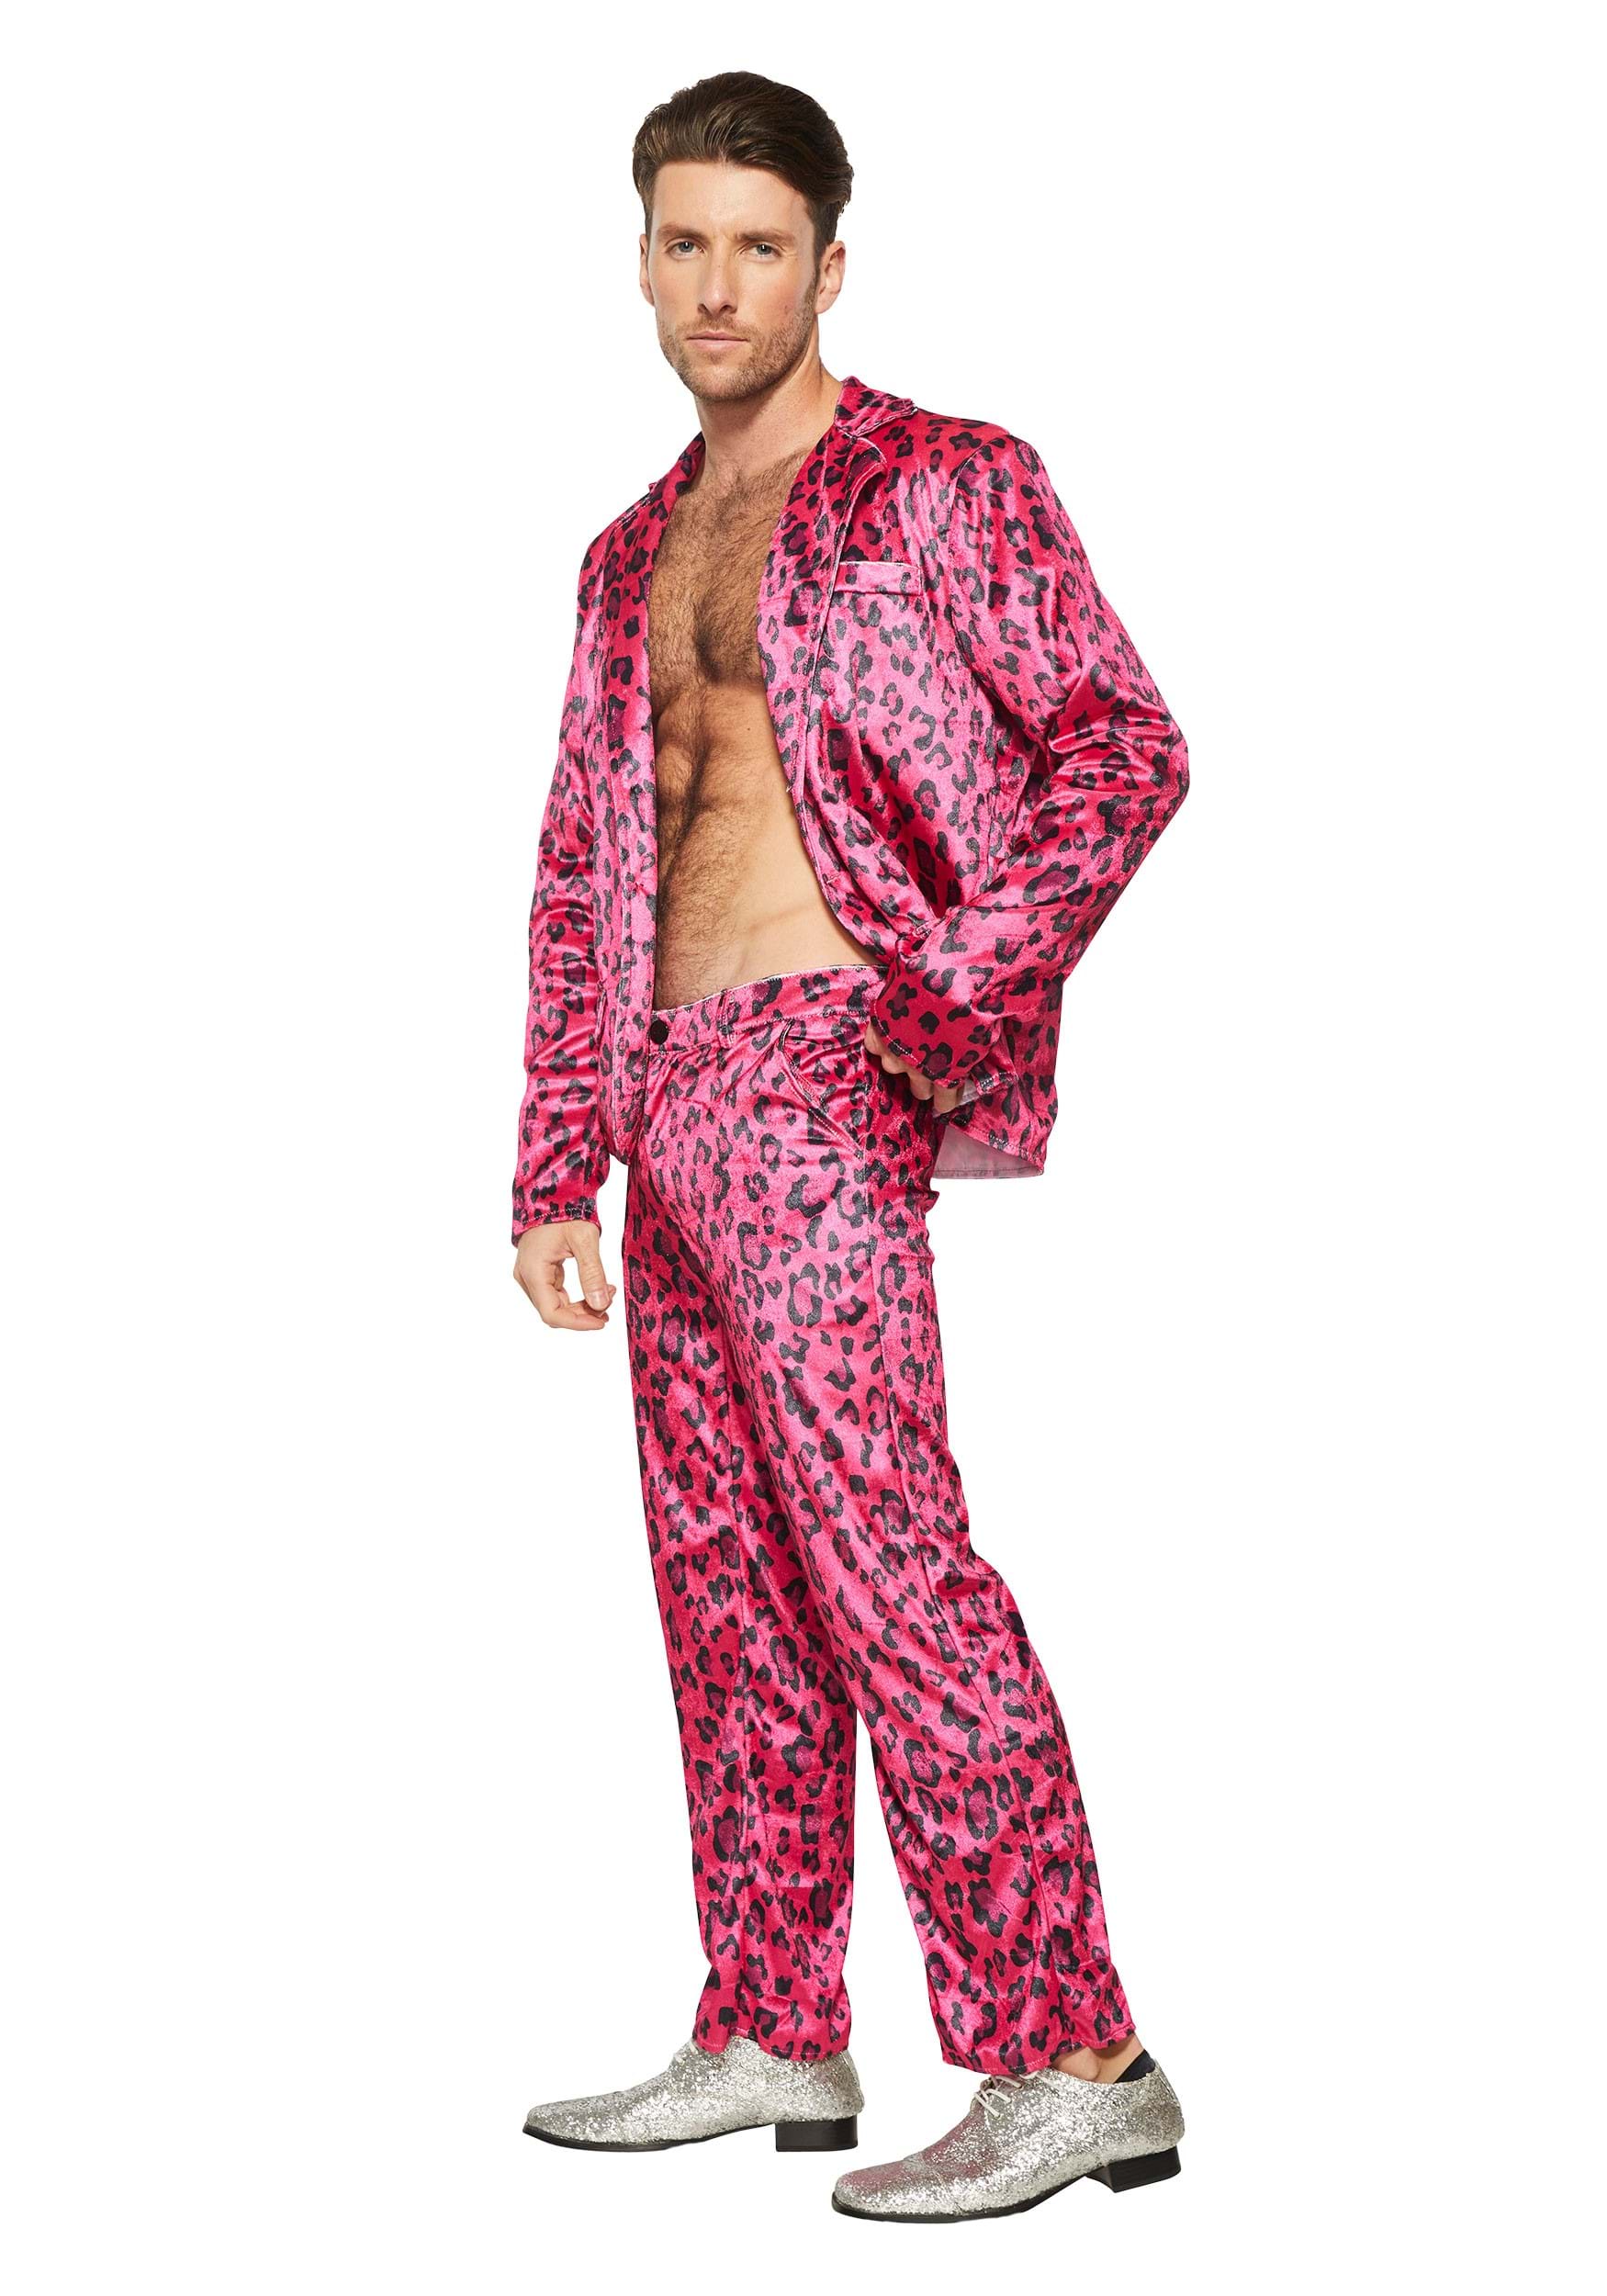 Pink Leopard Rock Star Men's Costume , Celebrity Costumes